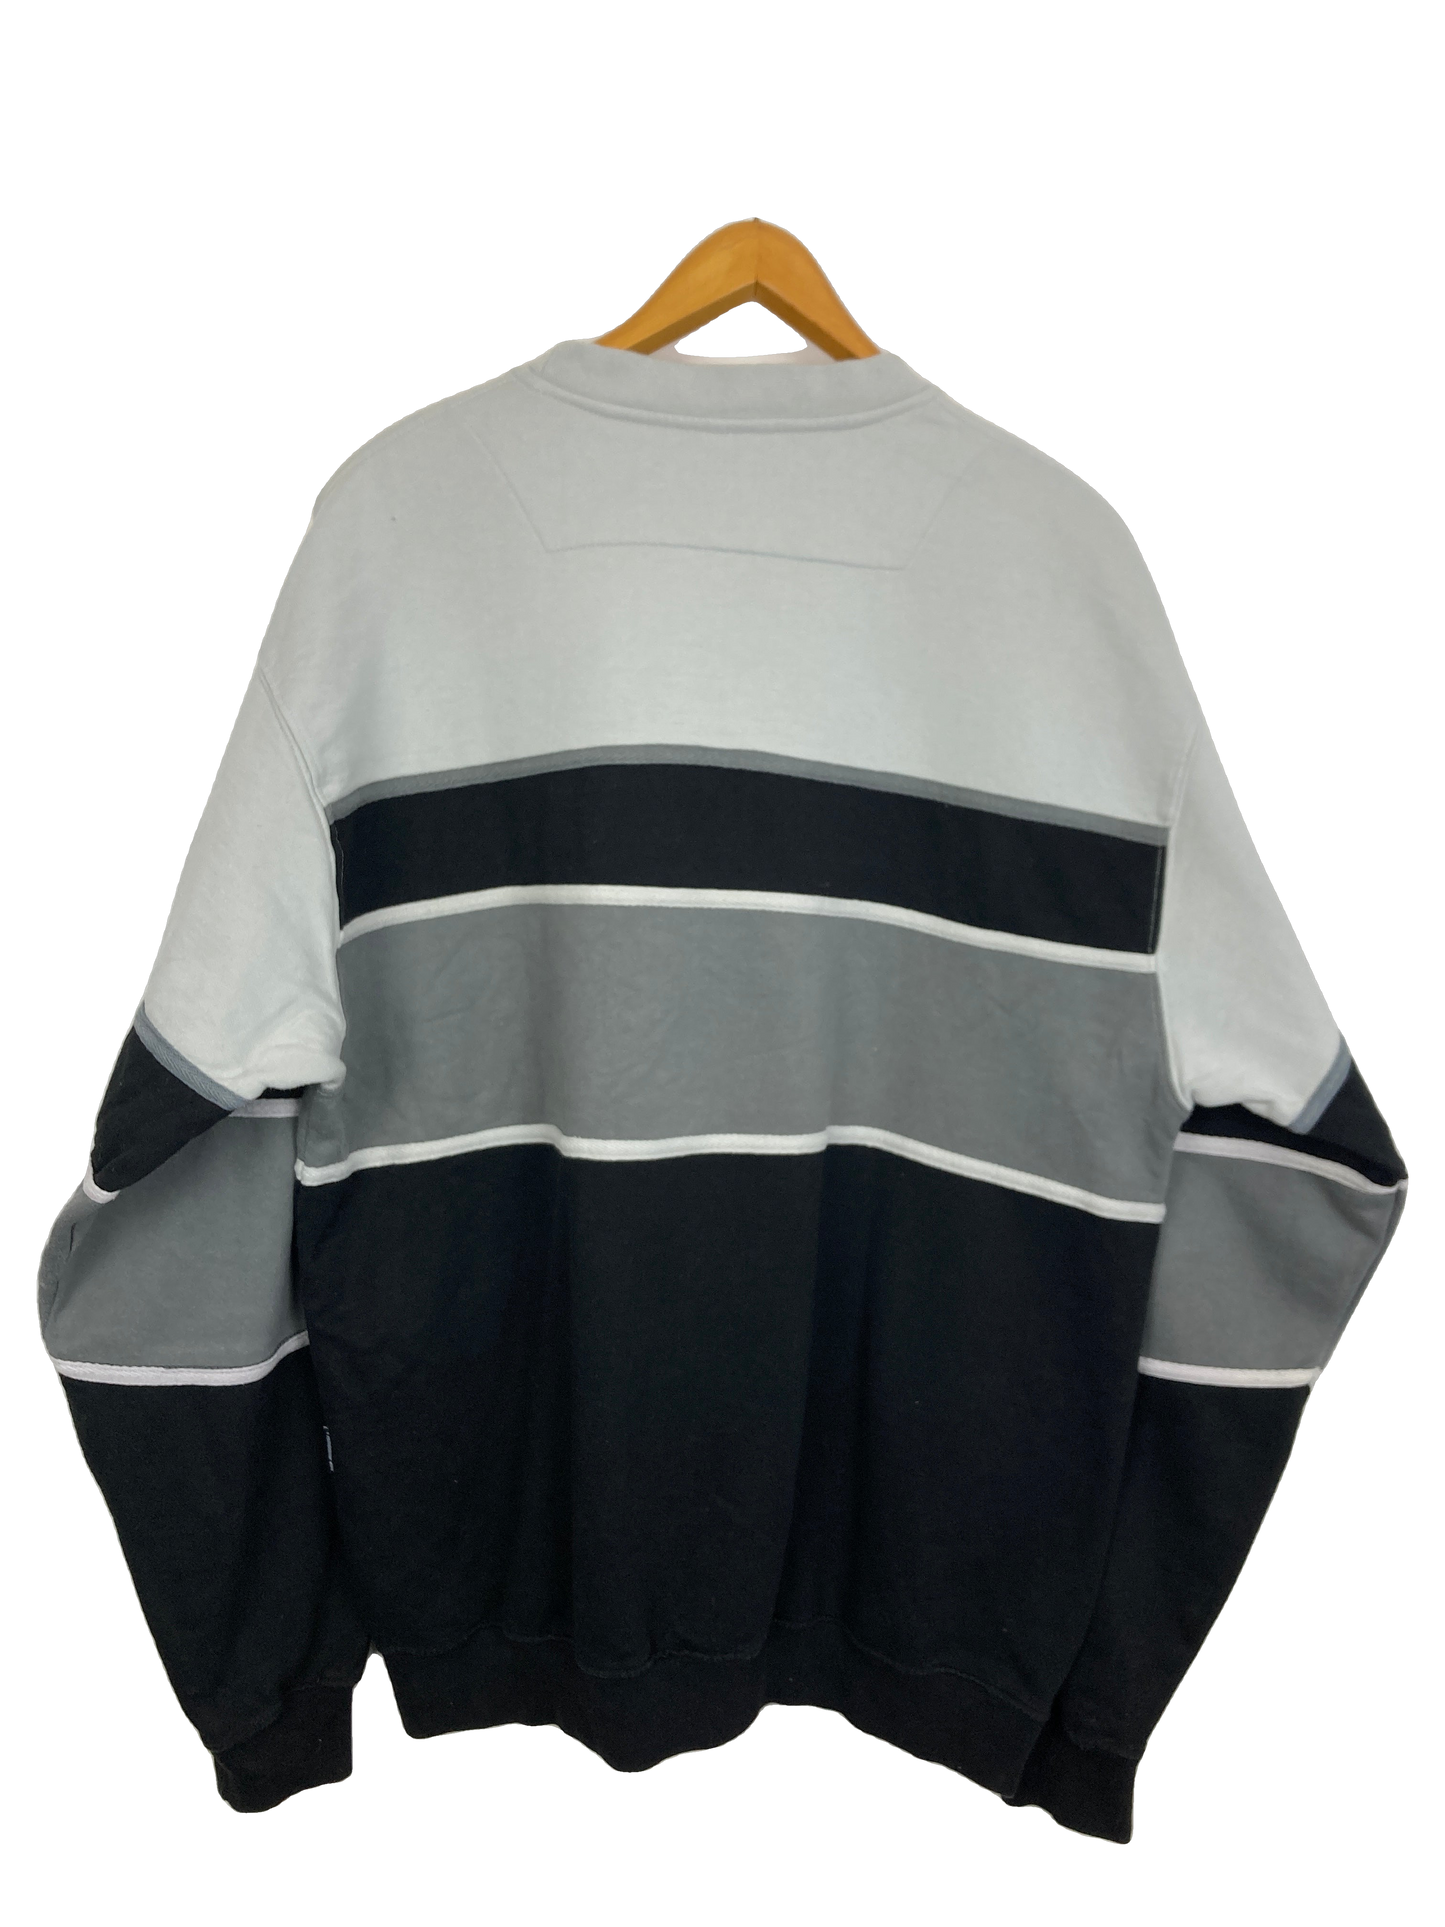 Fishbone Sweater (XL)